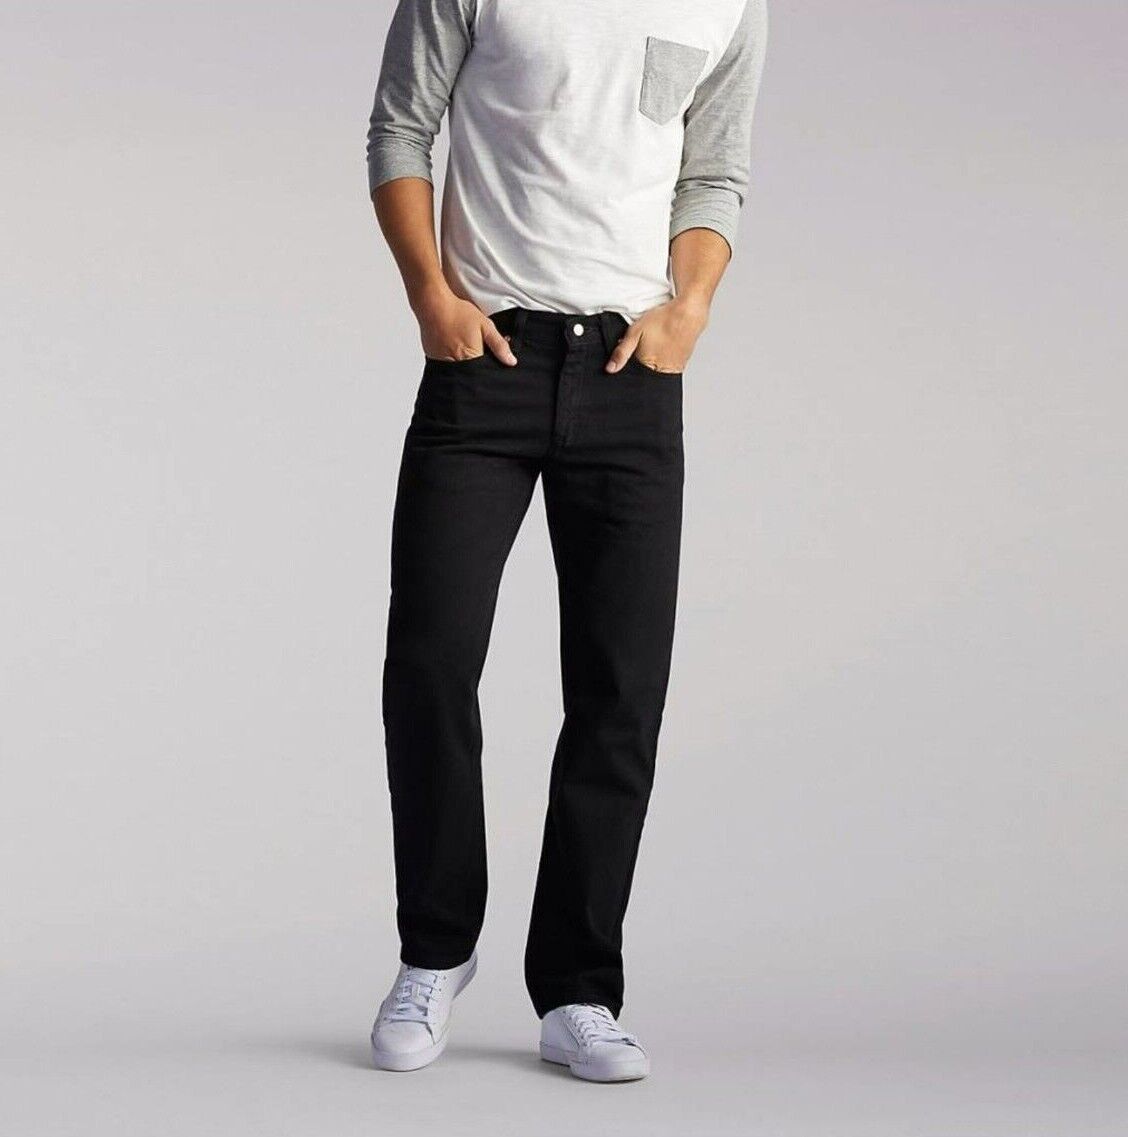 NWT Lee Men\'s Regular Fit Denim Jeans Straight Leg 5 Classic Colors Collection